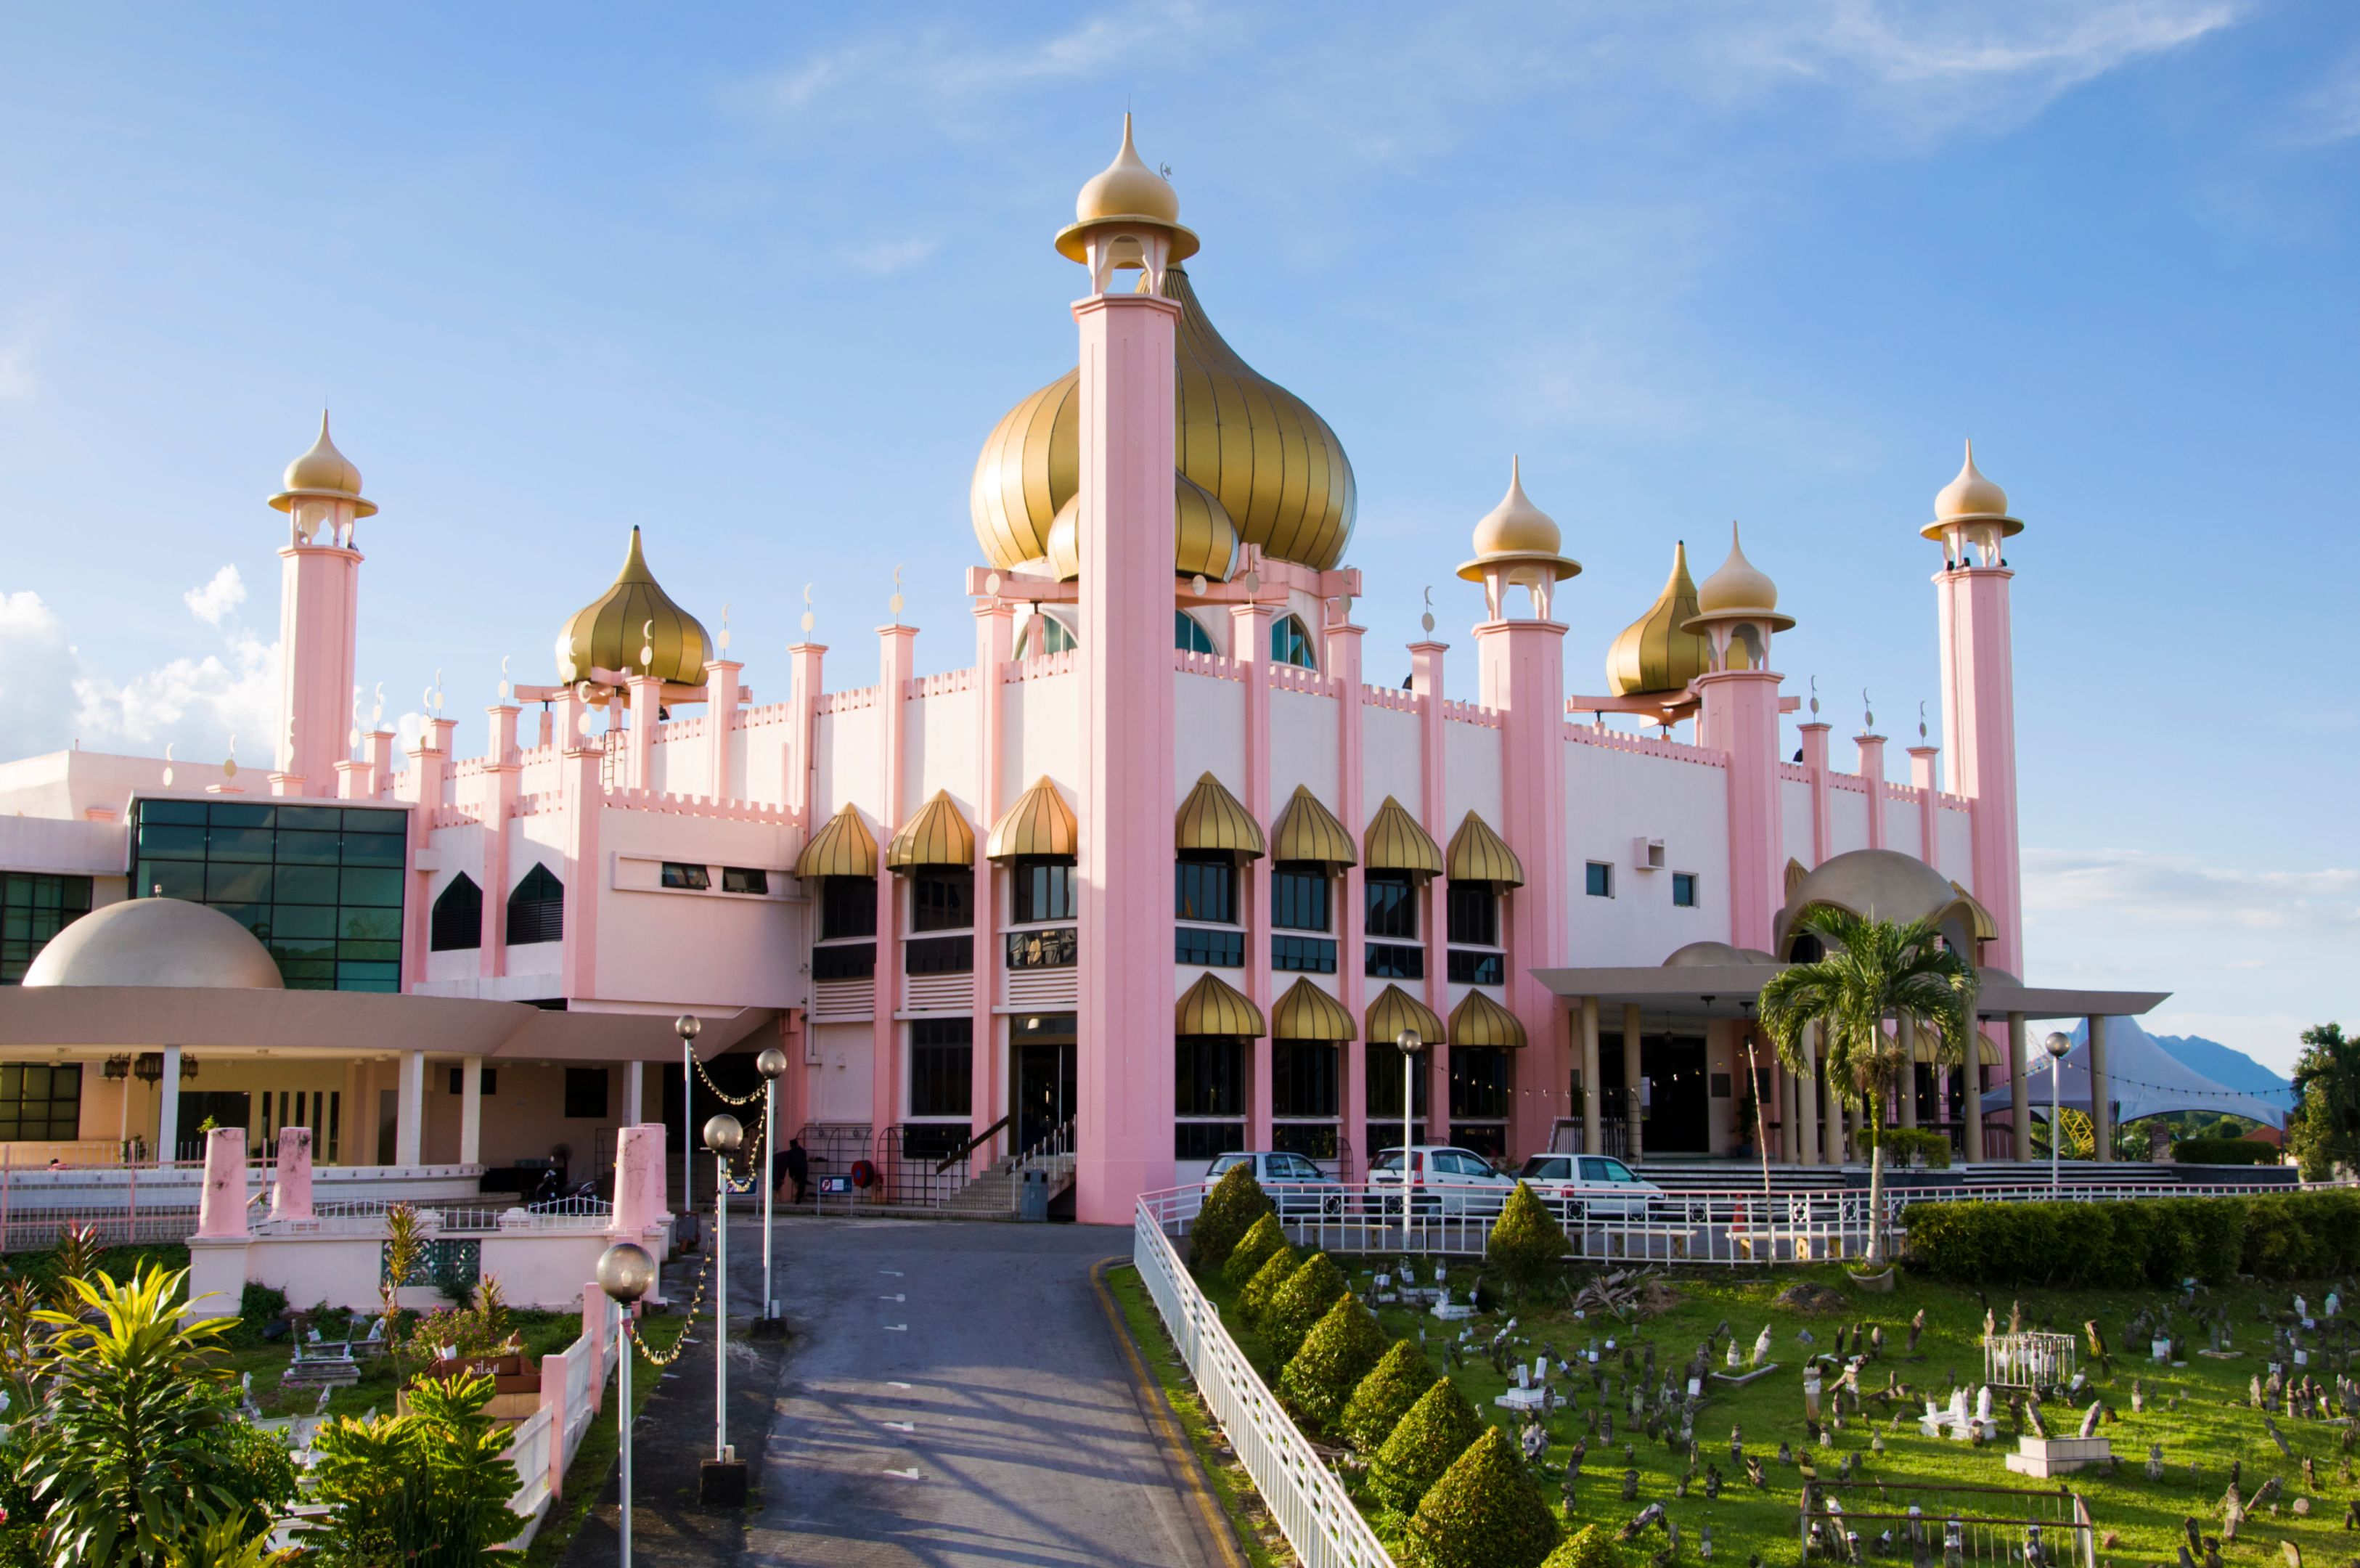 The Masjid Negara mosk in Kuching